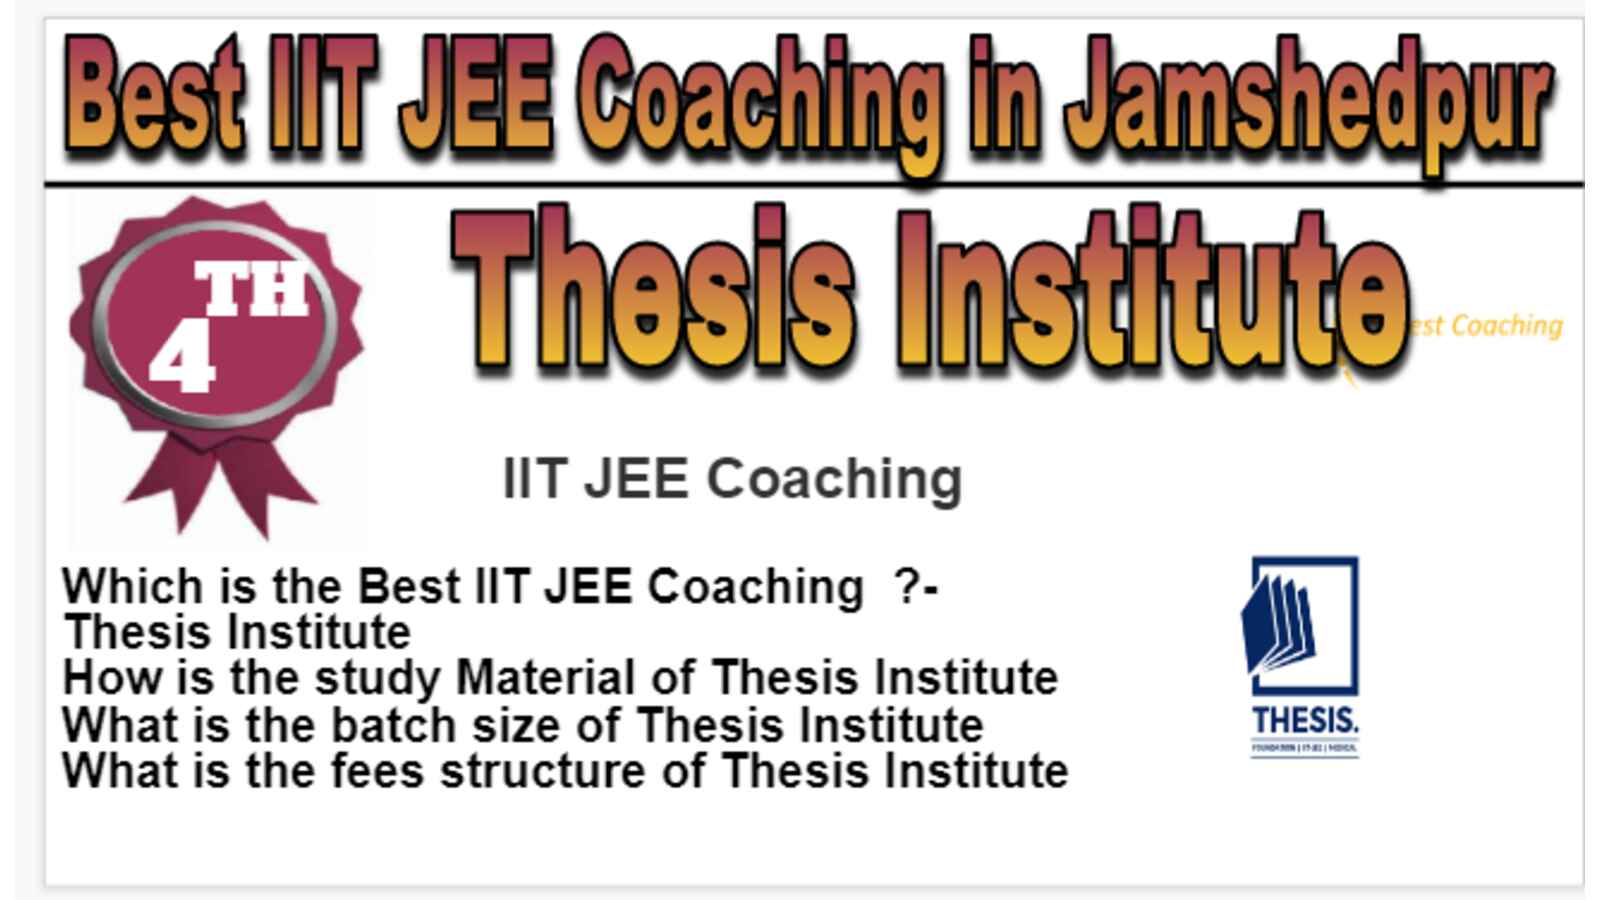 Rank 4 Best IIT JEE Coaching in Jamshedpur